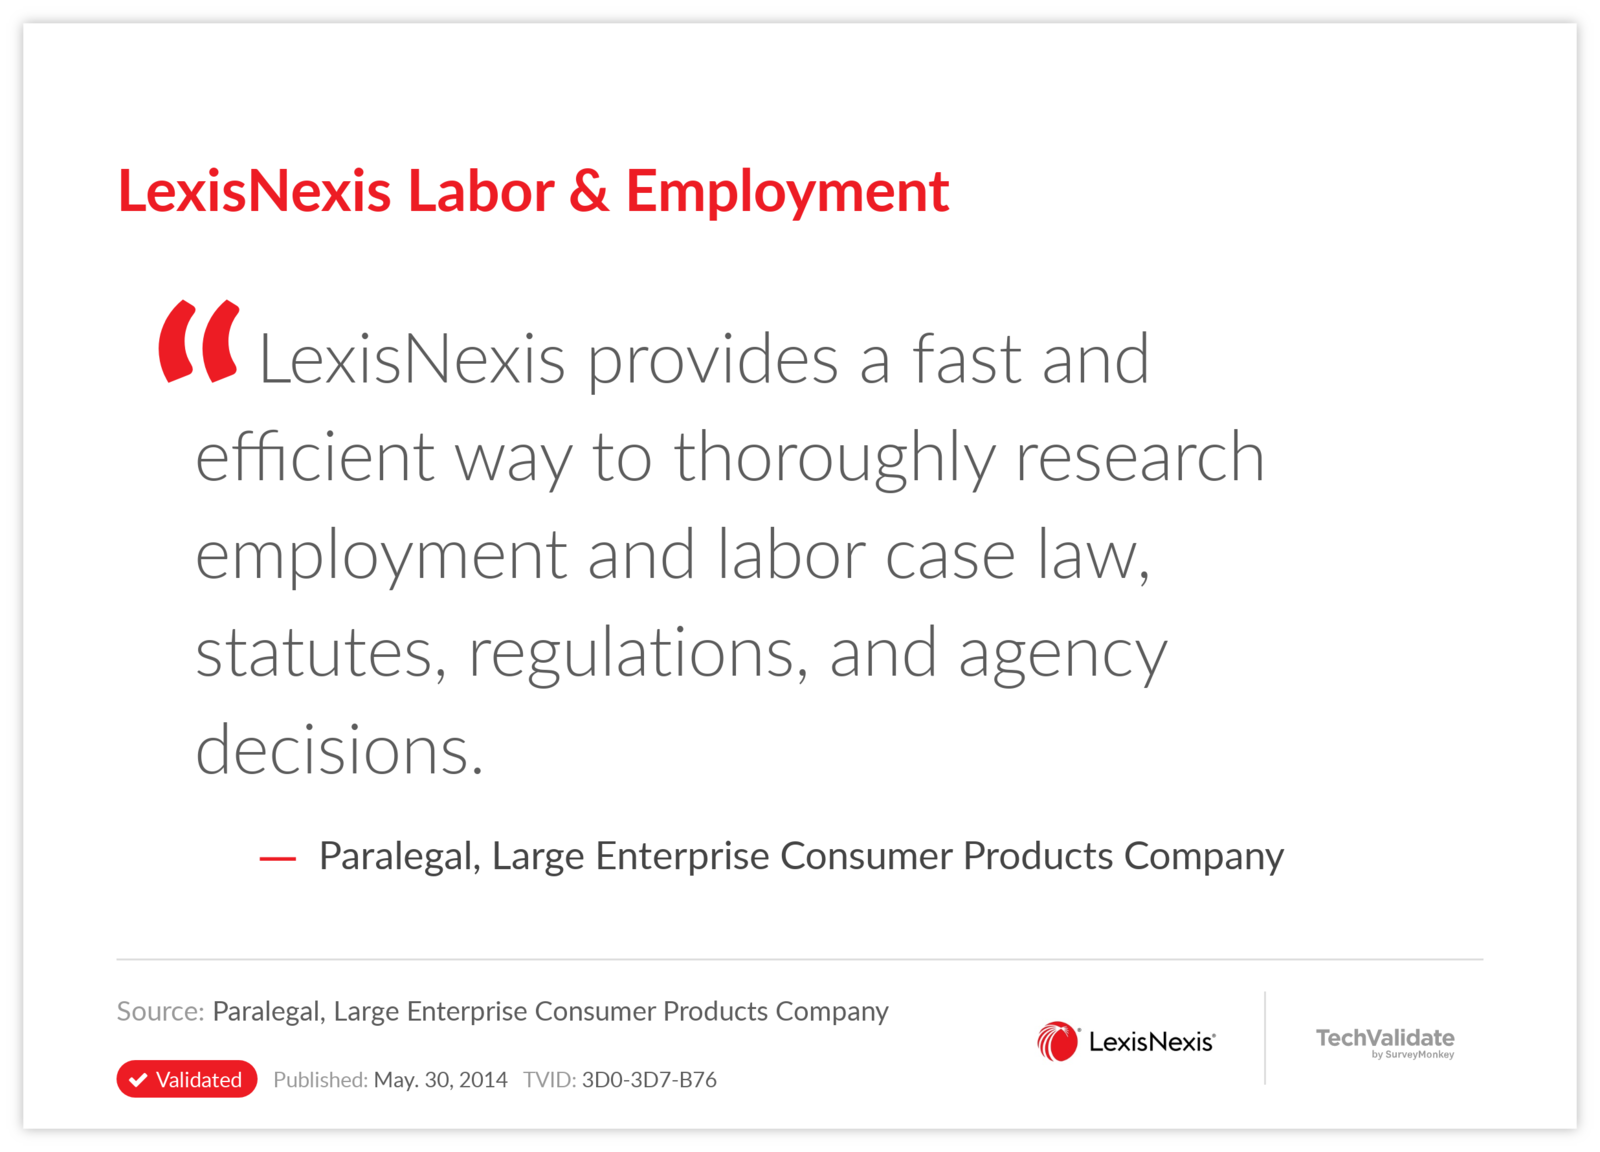 LexisNexis Labor & Employment